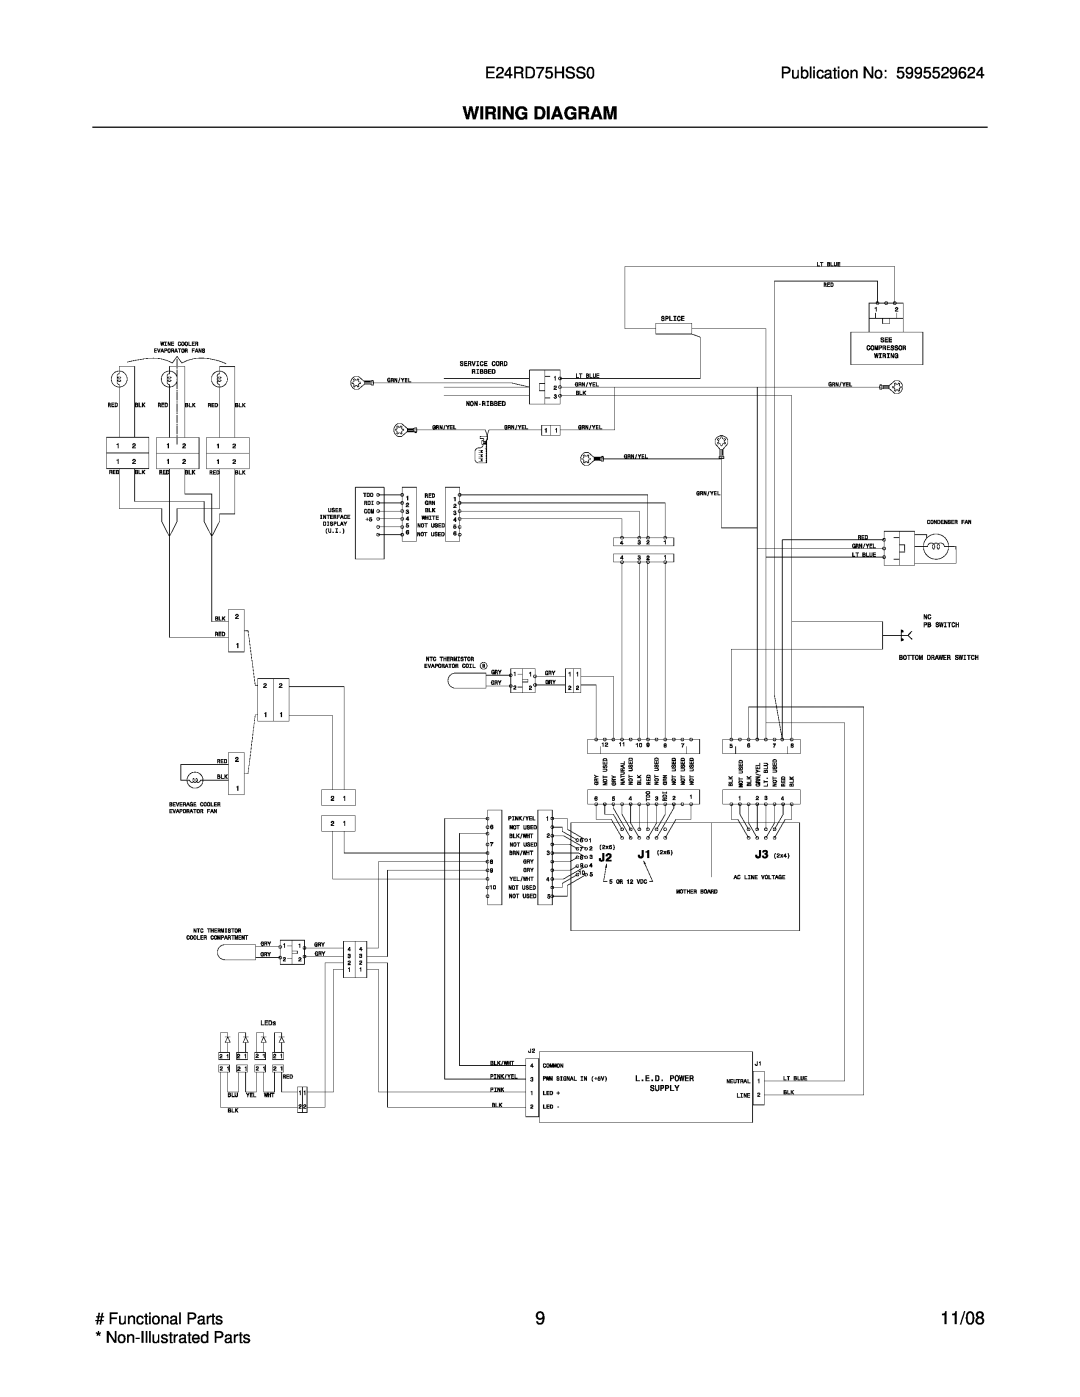 Electrolux E24RD75HSS0 manual Wiring Diagram, 11/08, Publication No 